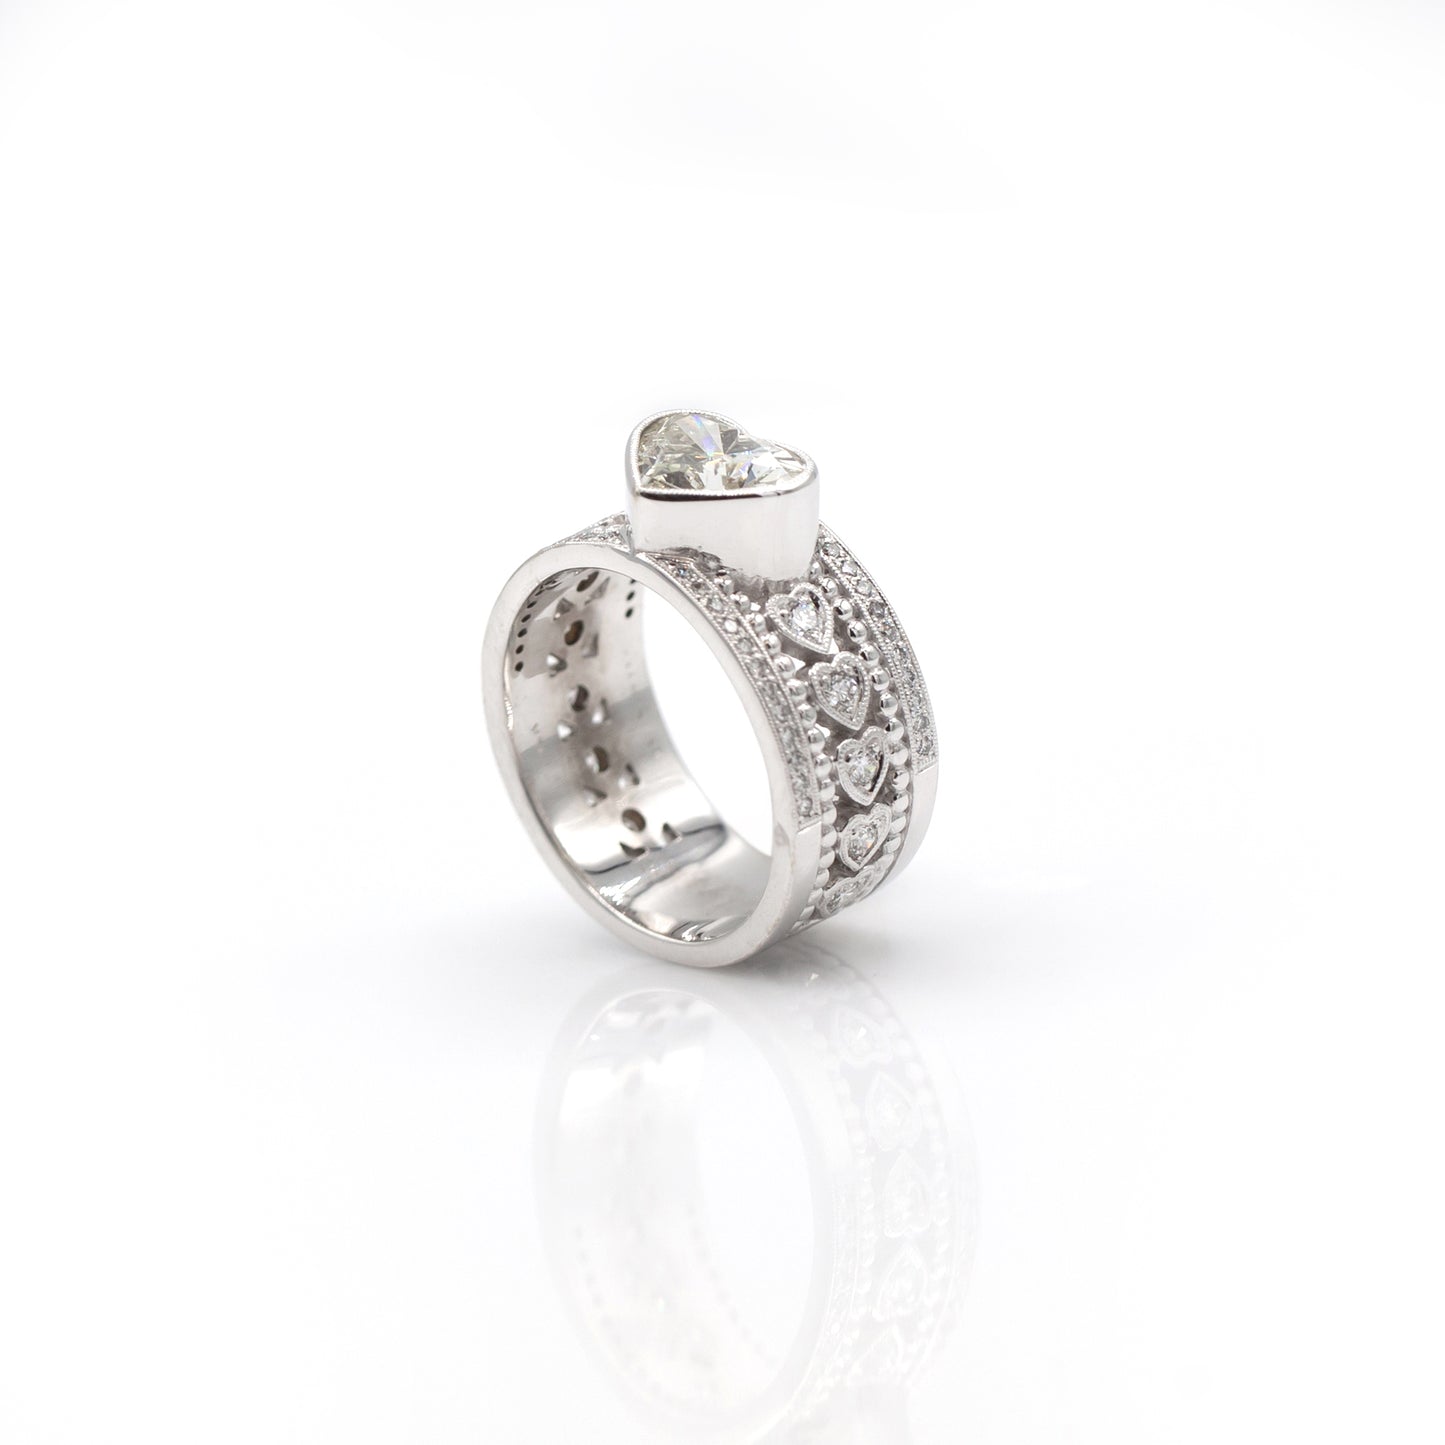 Tom Mathis Designs 2.45CT Heart-Shaped Diamond Ring